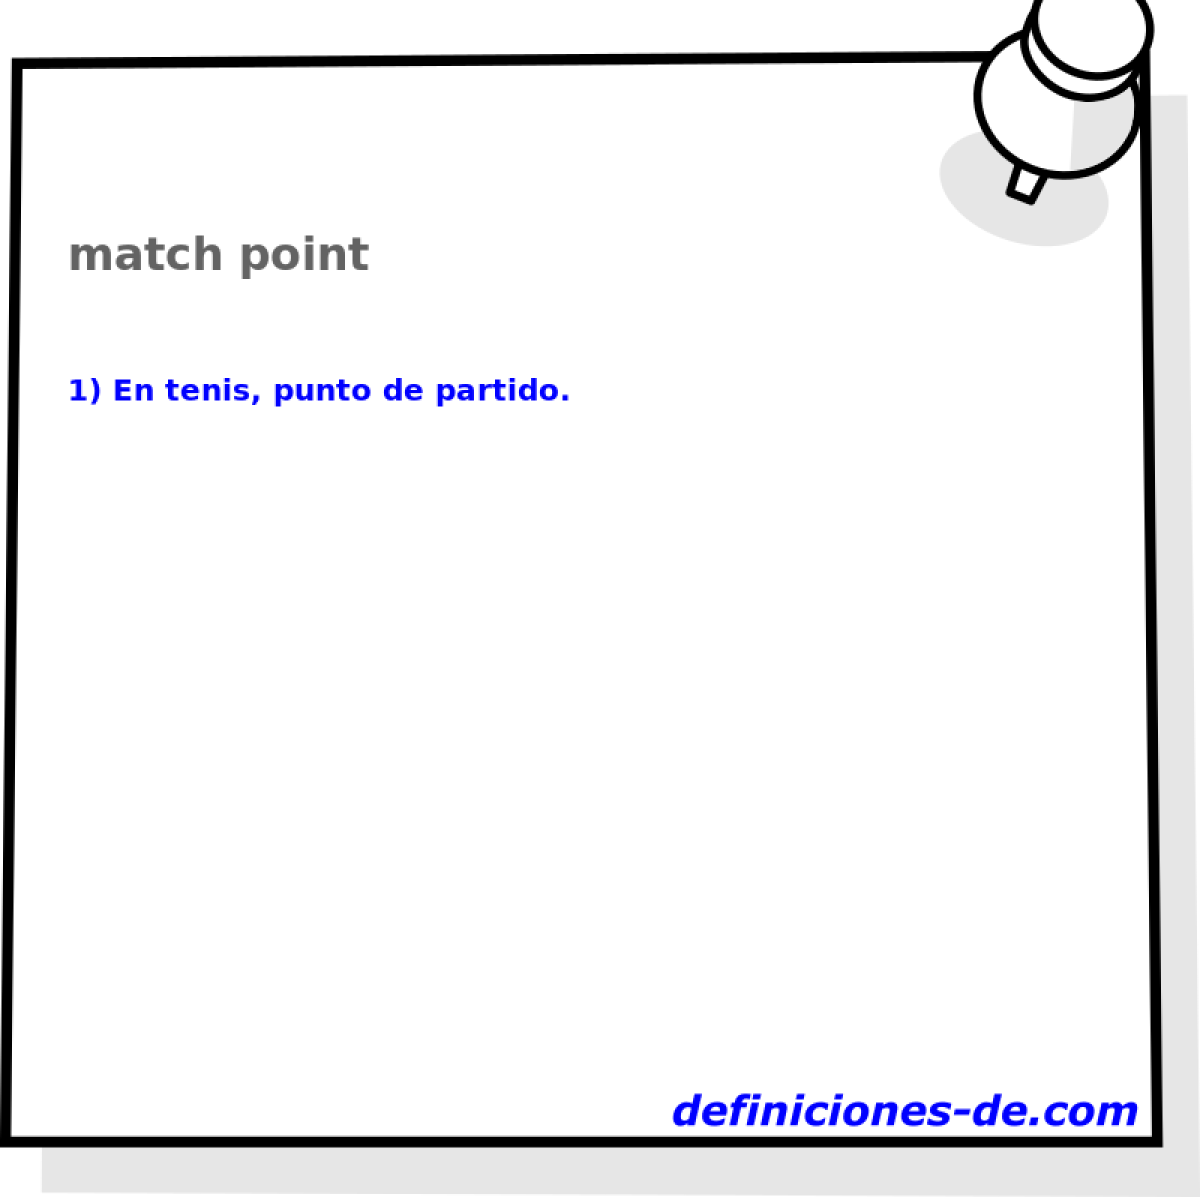 match point 